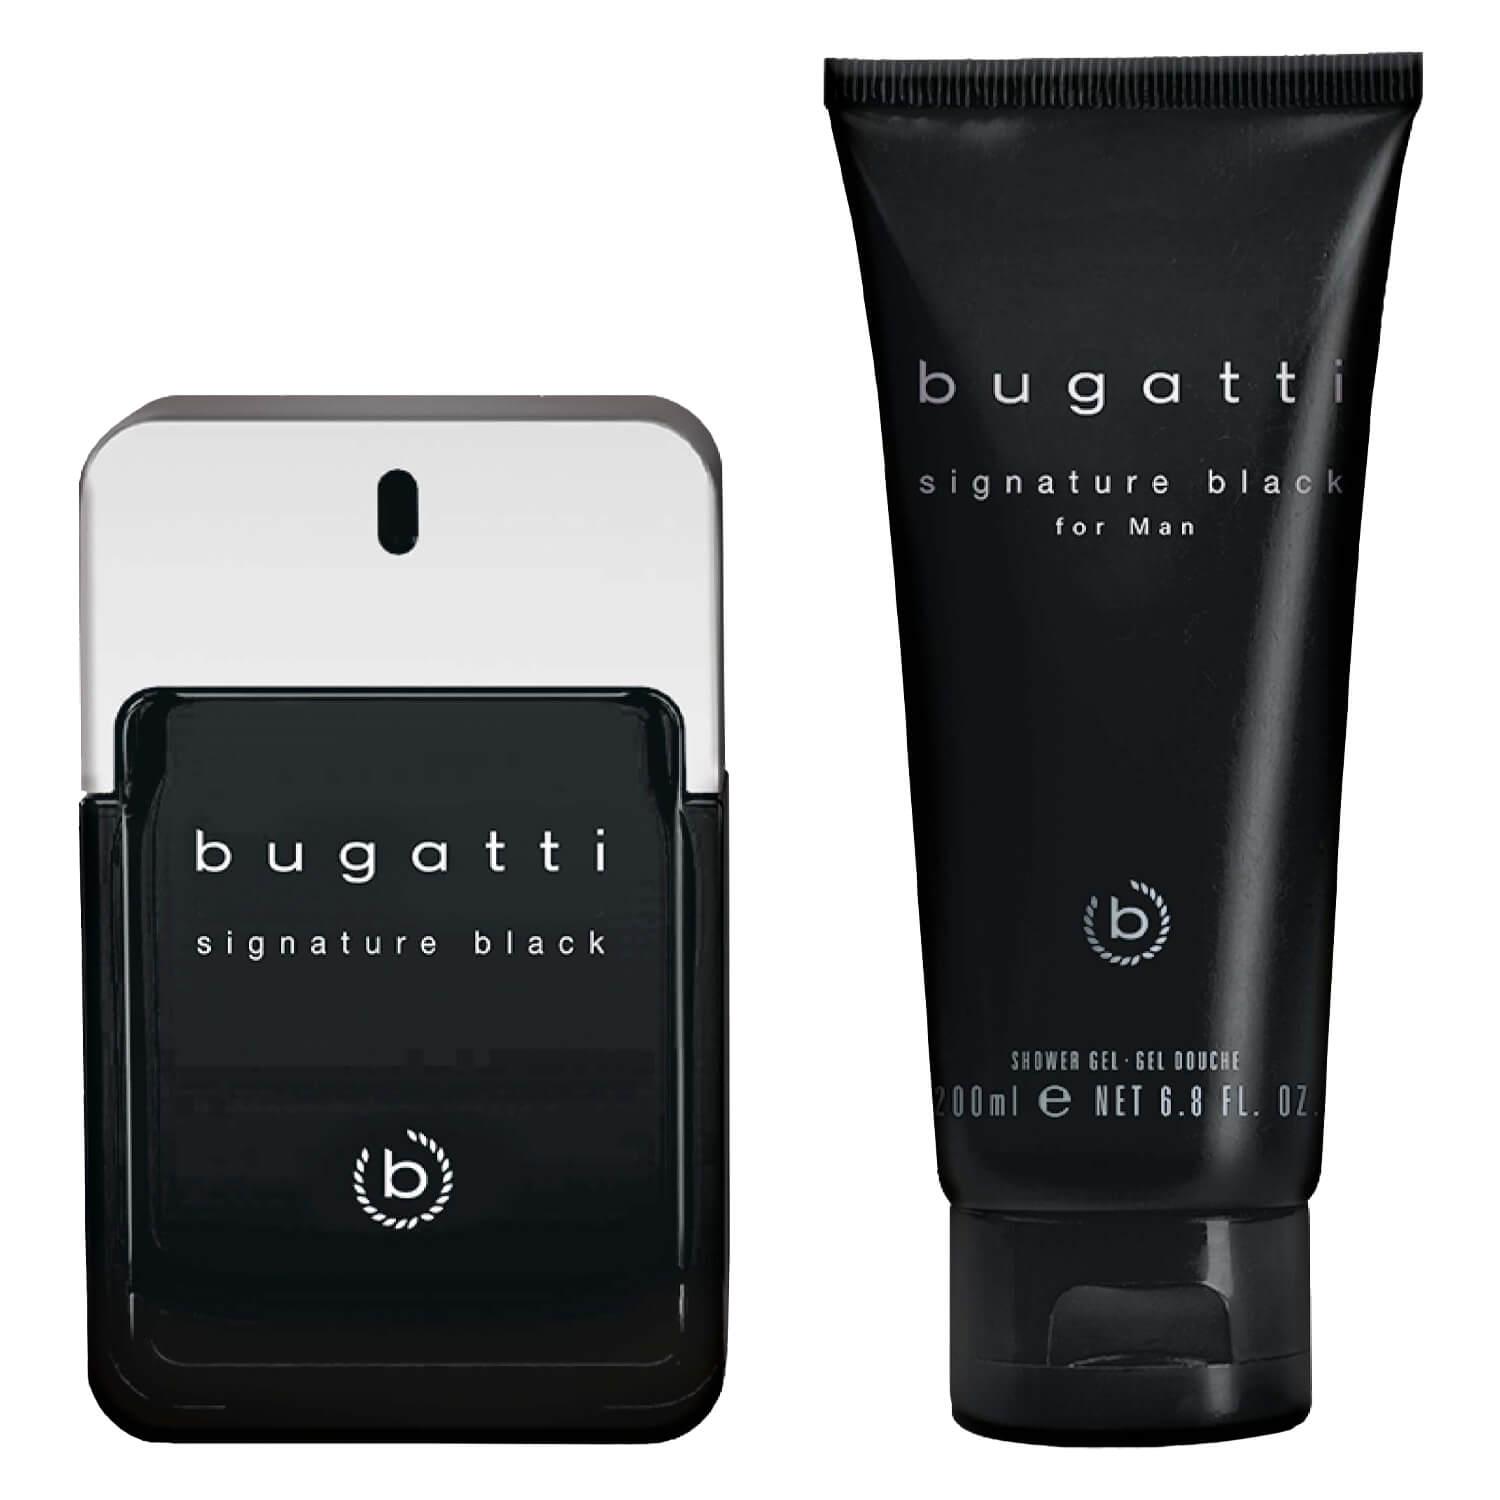 bugatti - Signature Black Eau de Toilette Set